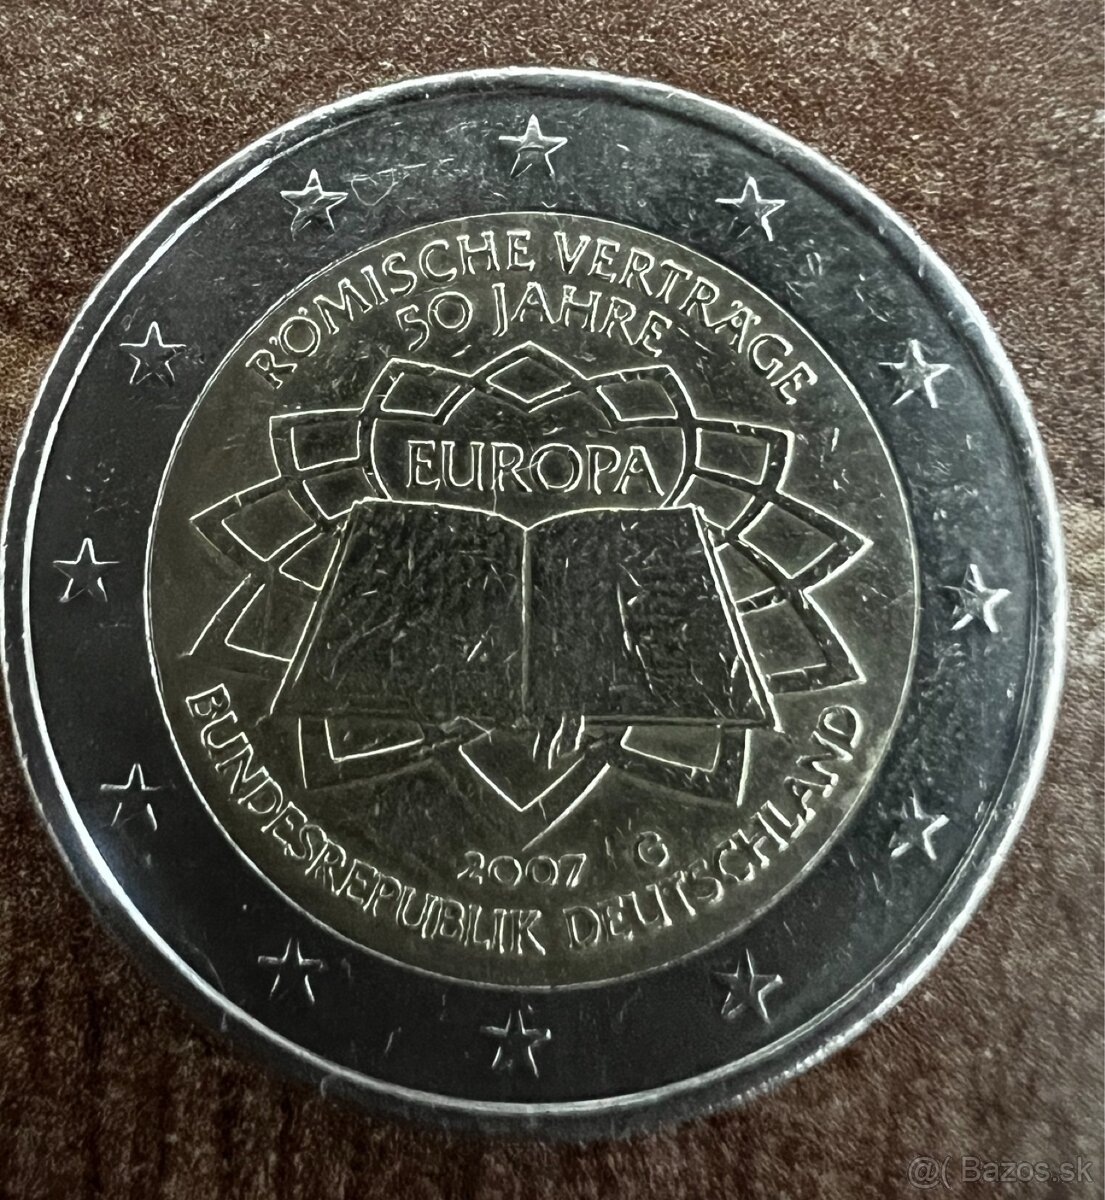 Vzácná 2€ minca